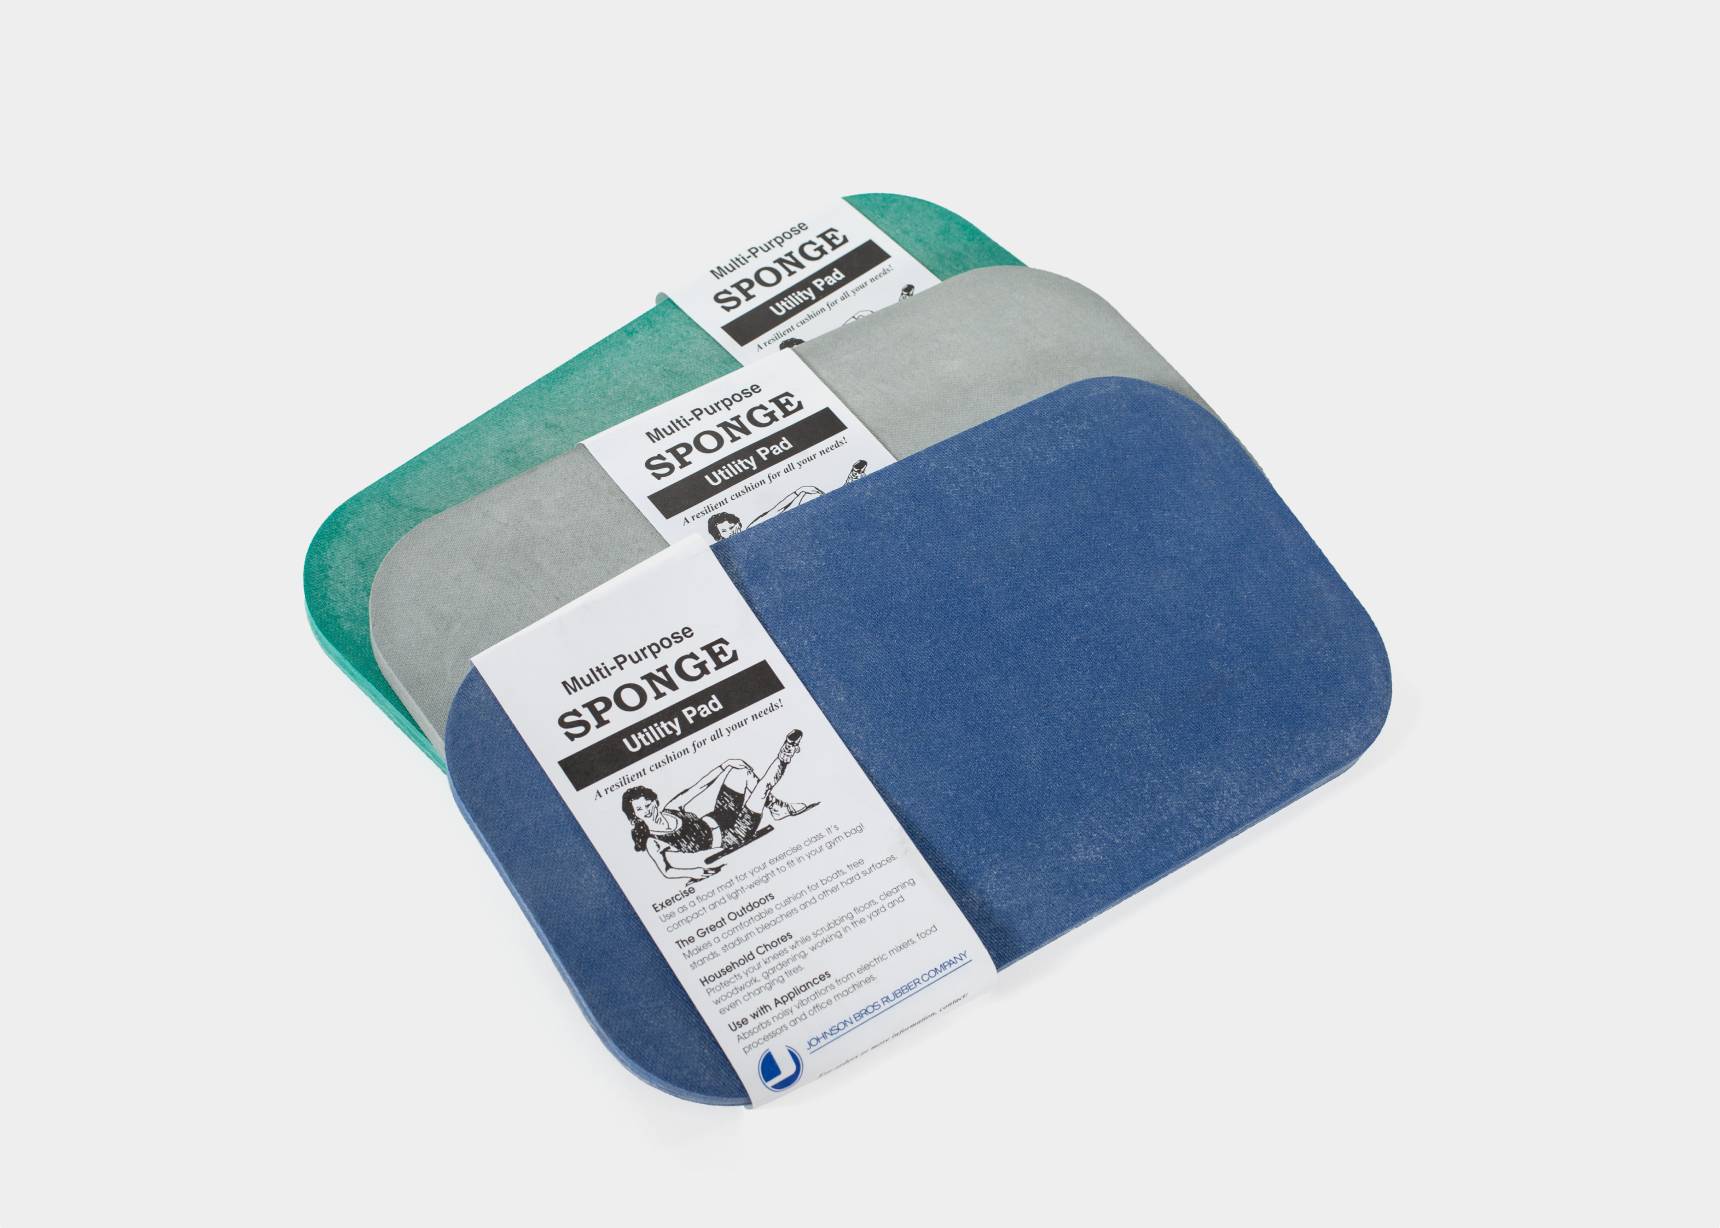 Multi-purpose non-skid utility pads in aqua green, light gray, and blue.